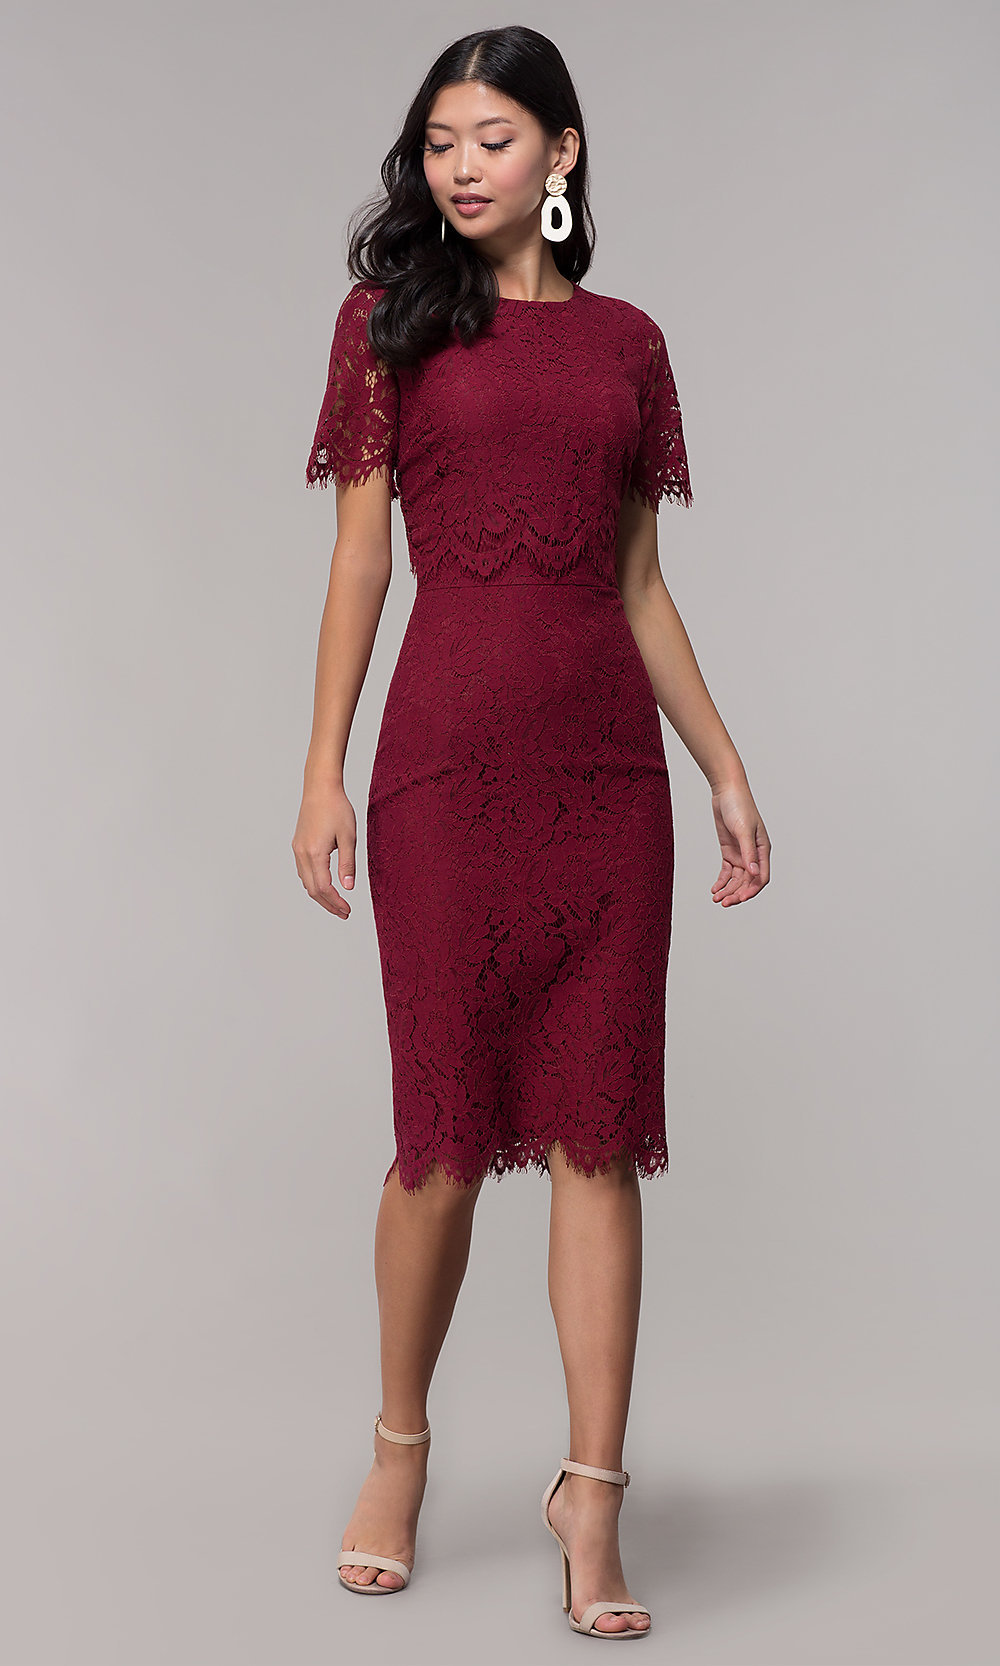 Pretty Burgundy semi formal lace dress. 1 60+ Most Fashionable Semi Formal Wedding Dresses for Female Guests - 22